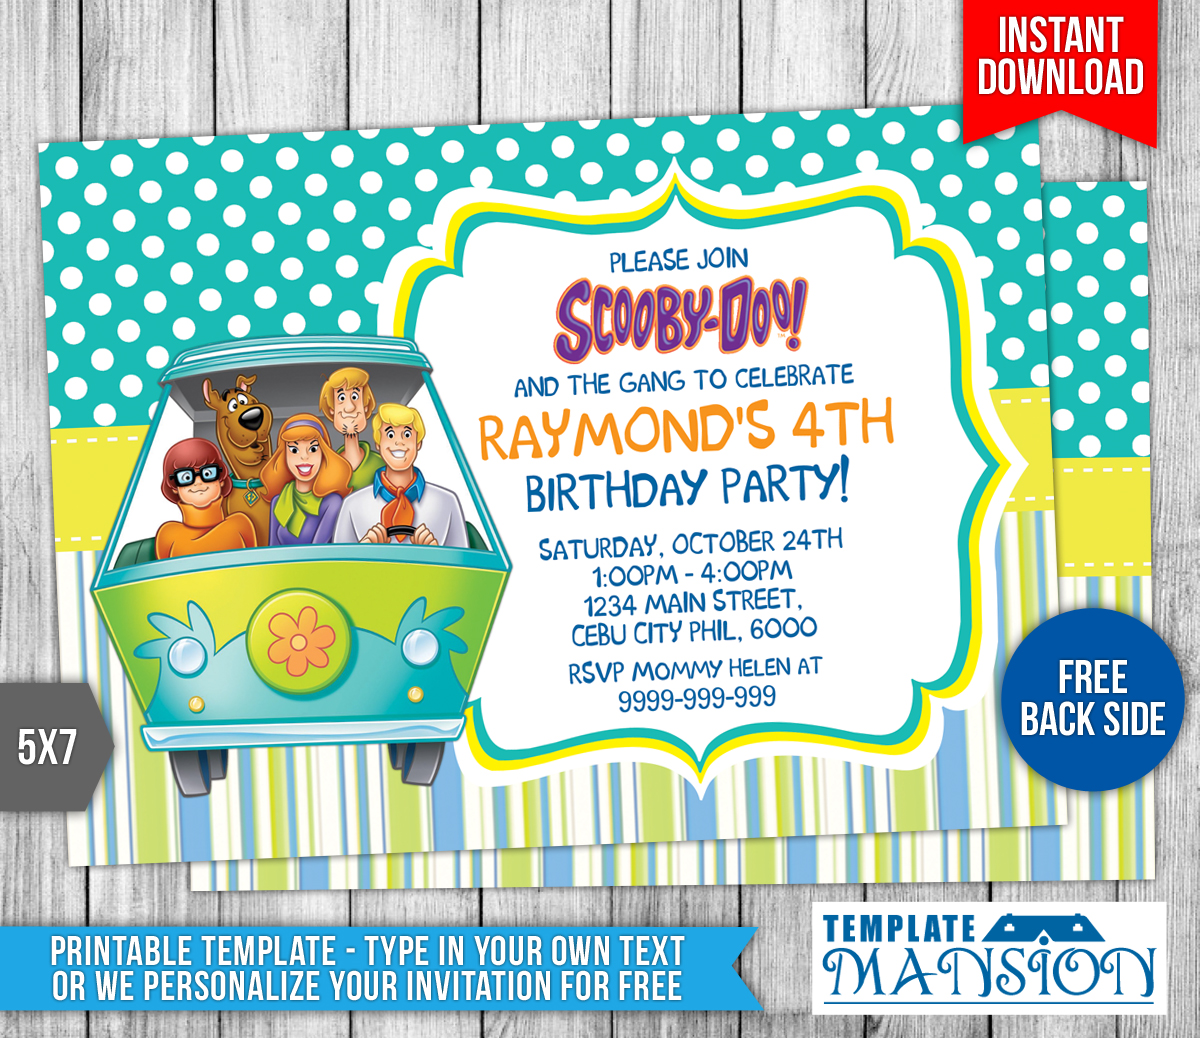 Scooby Doo Birthday Invitation Template 1 by templatemansion on DeviantArt